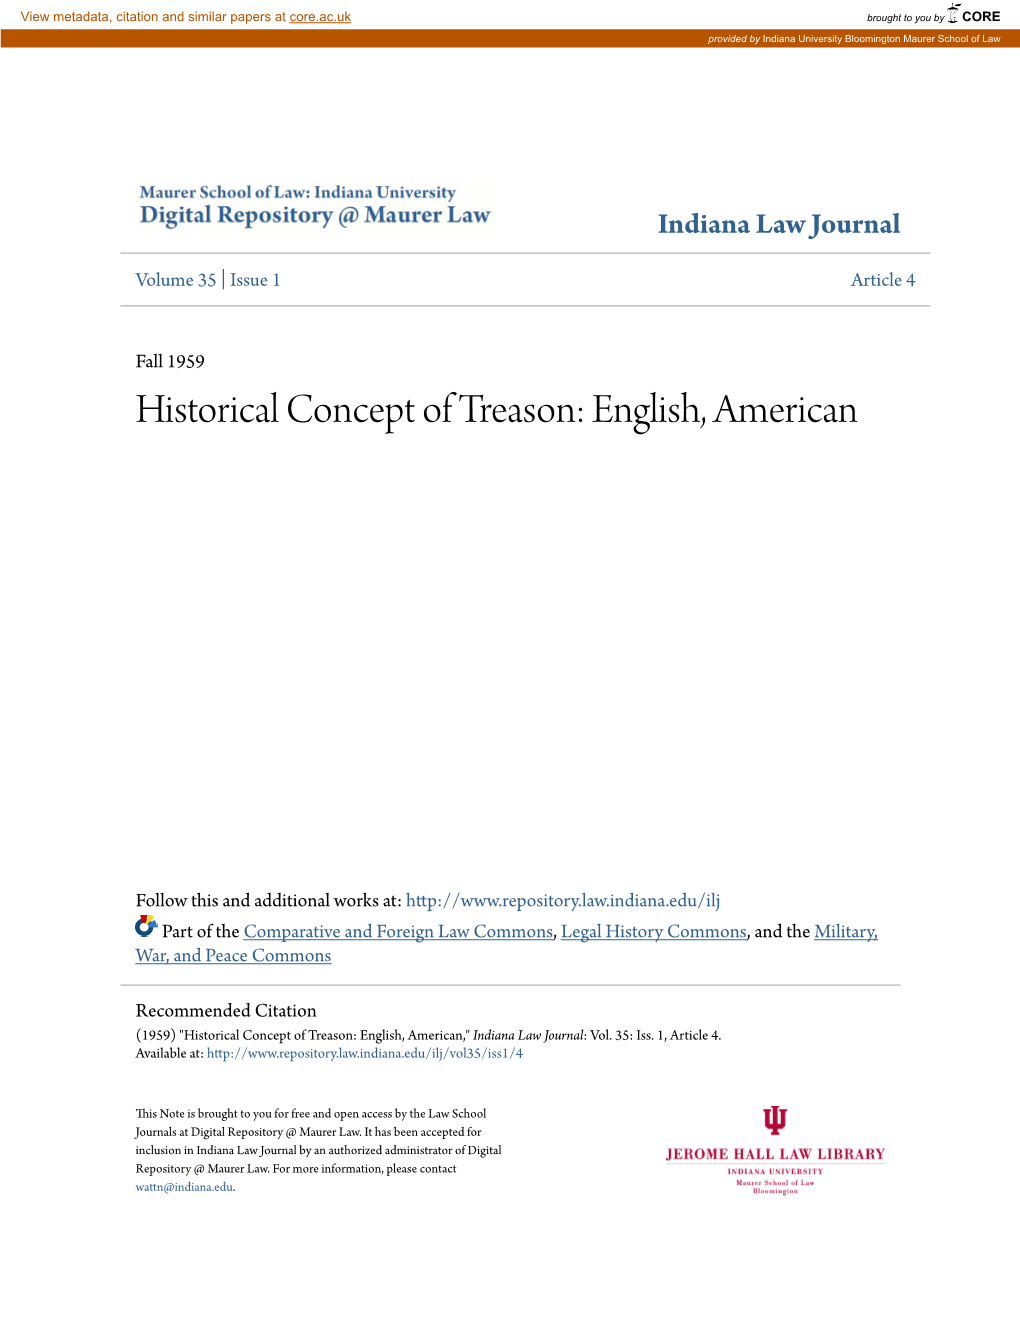 Historical Concept of Treason: English, American